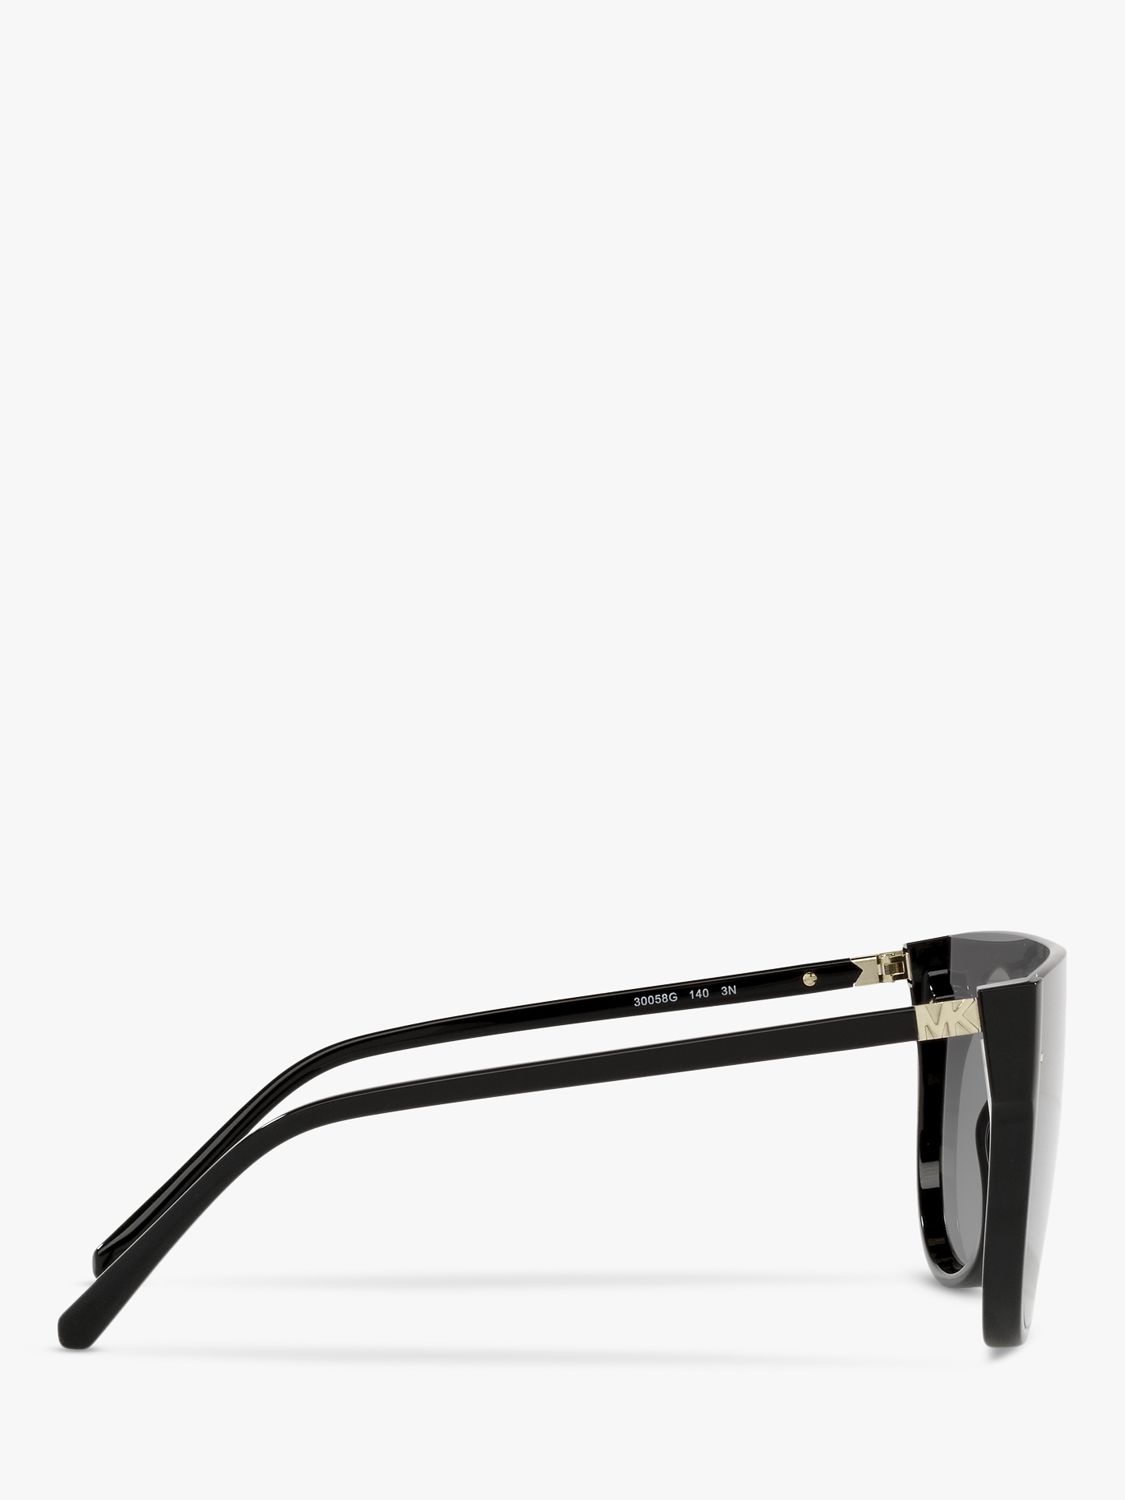 Michael Kors MK2151 Women's Aspen Irregular Sunglasses, Bio Black/Grey Gradient